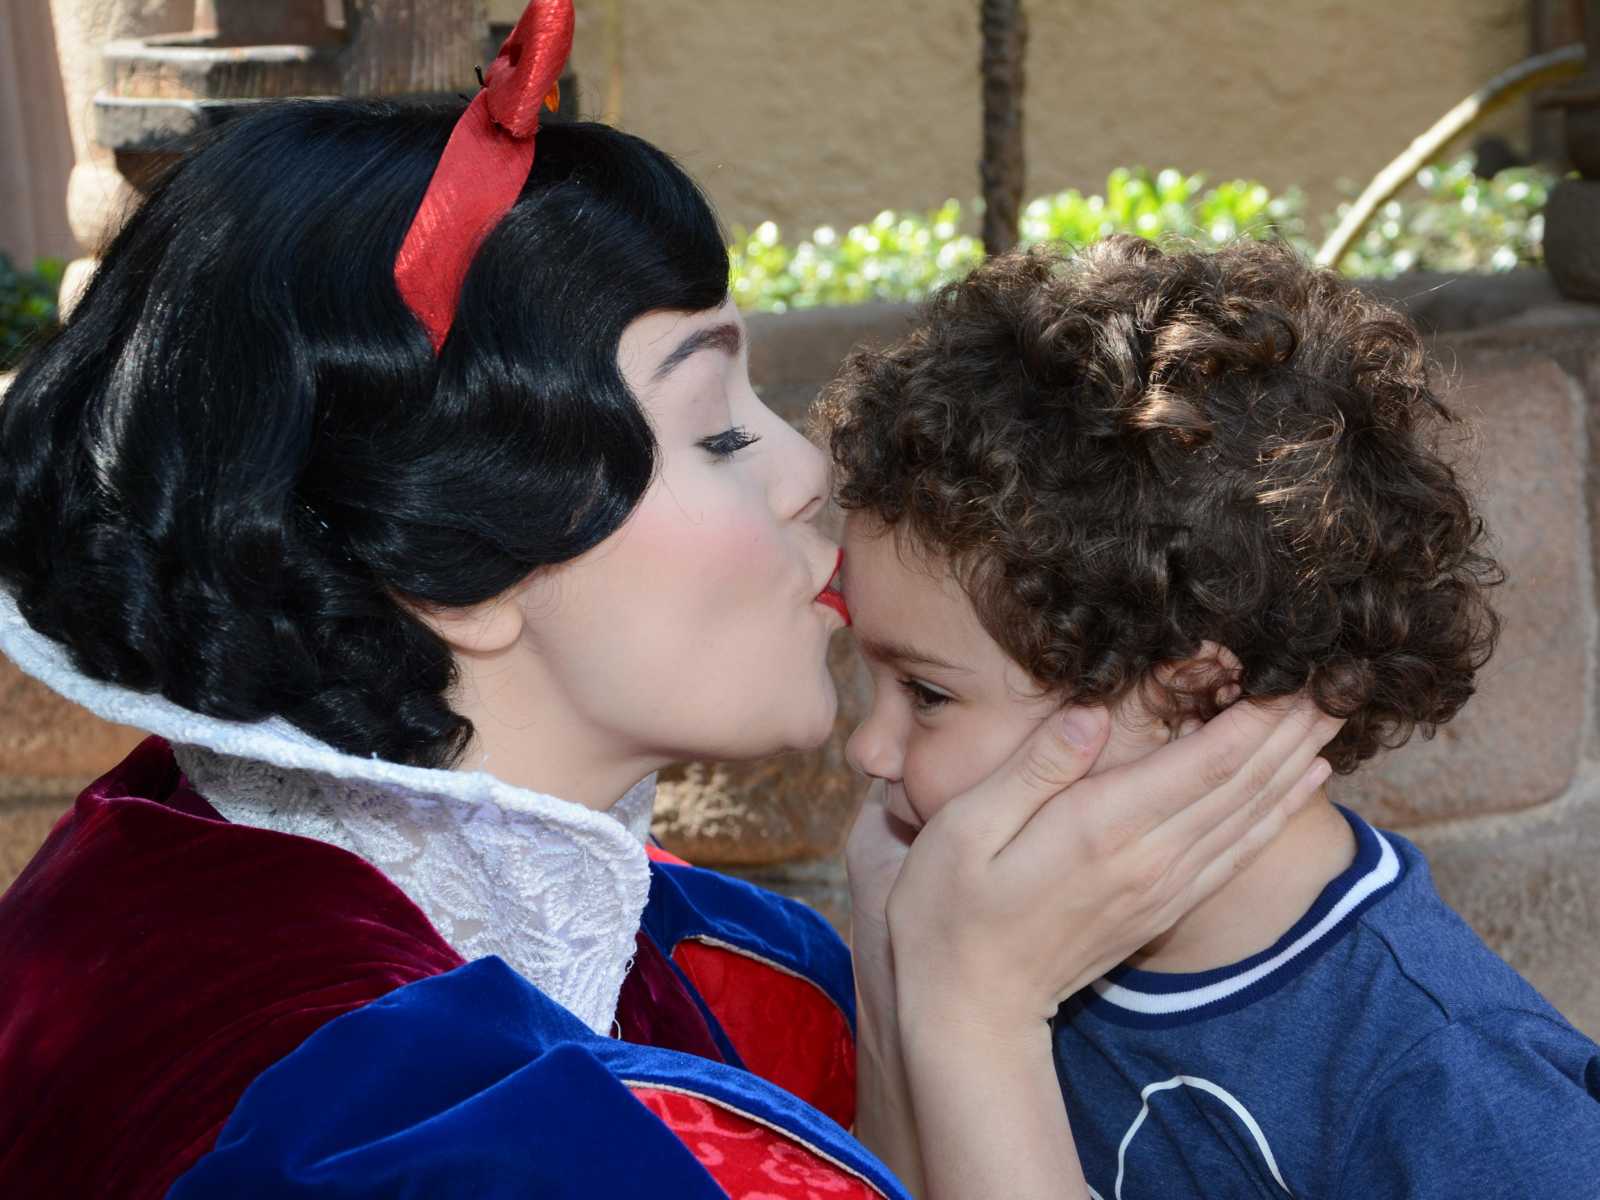 Snow White kisses forehead of toddler at Disney World